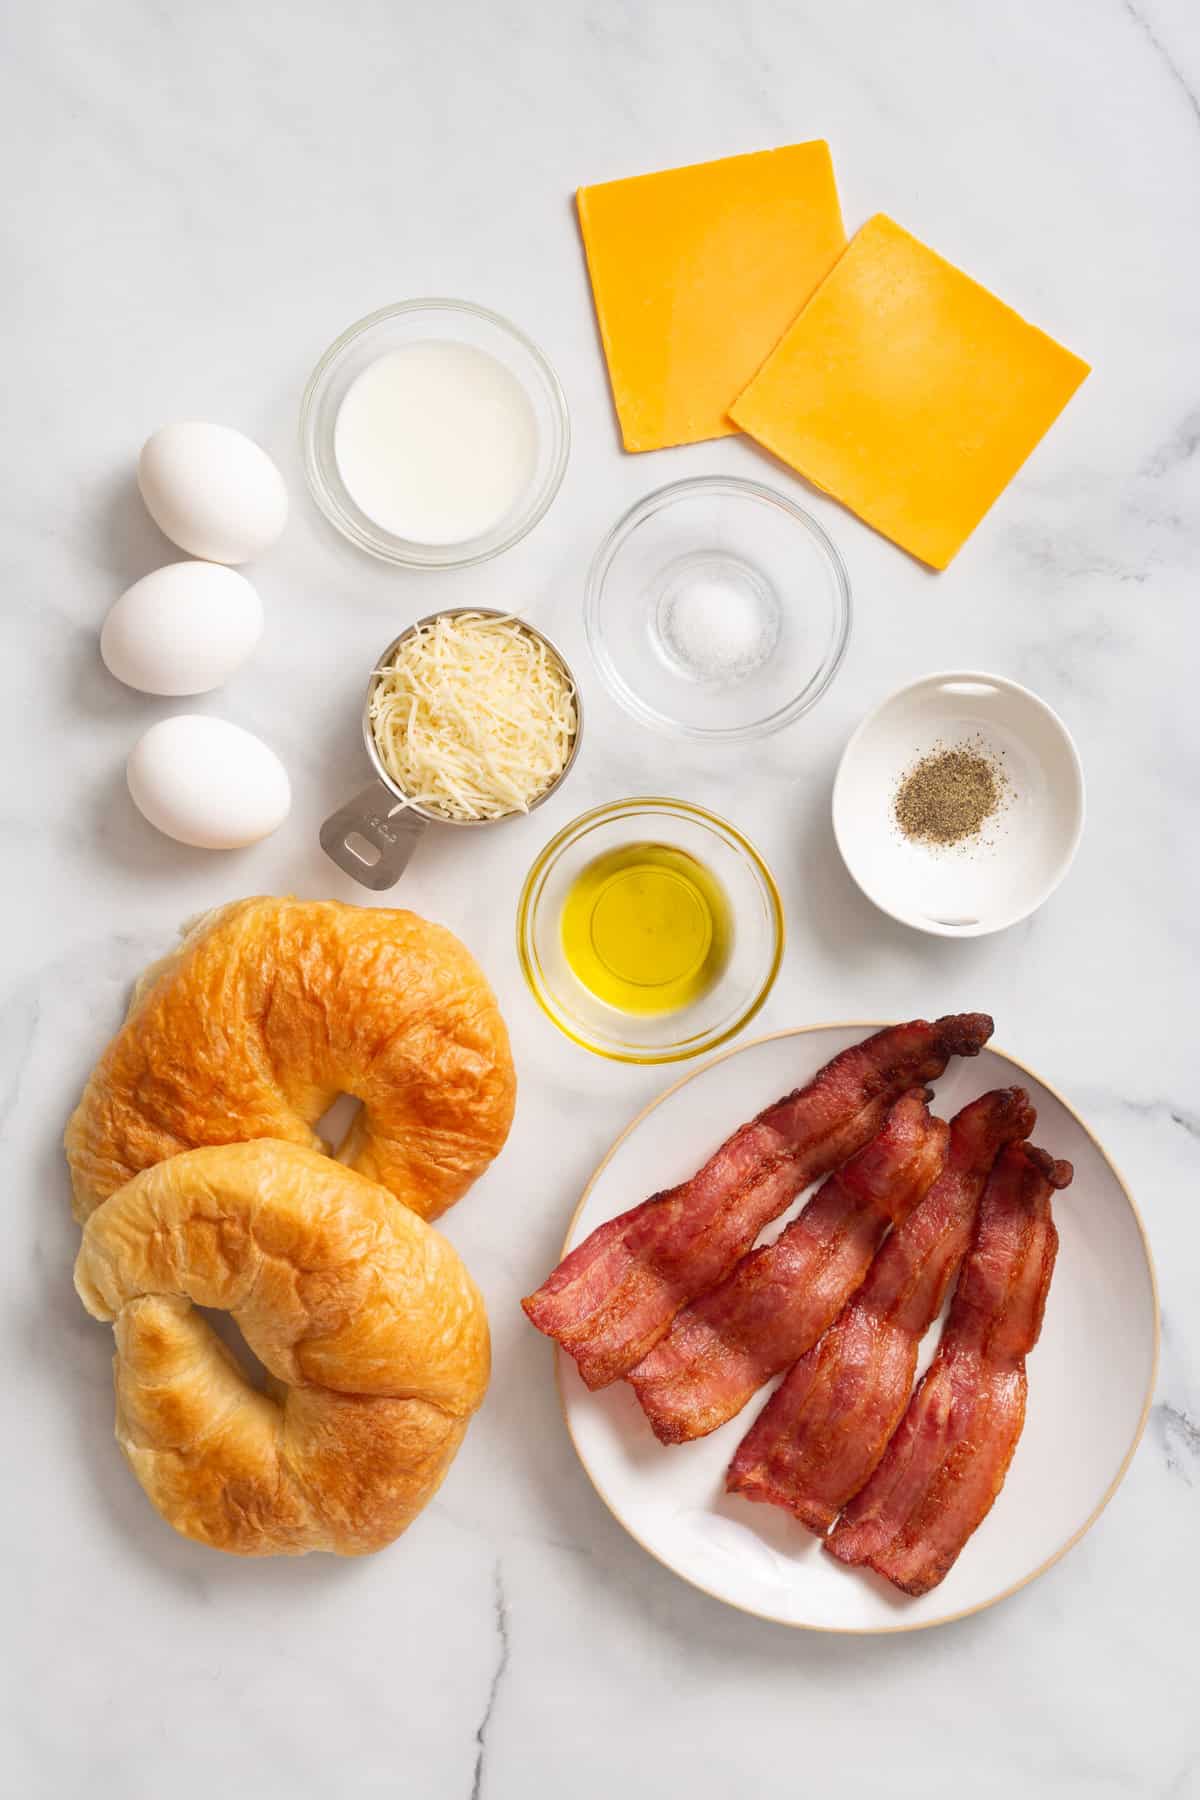 Ingredients to make croissant breakfast sandwiches.